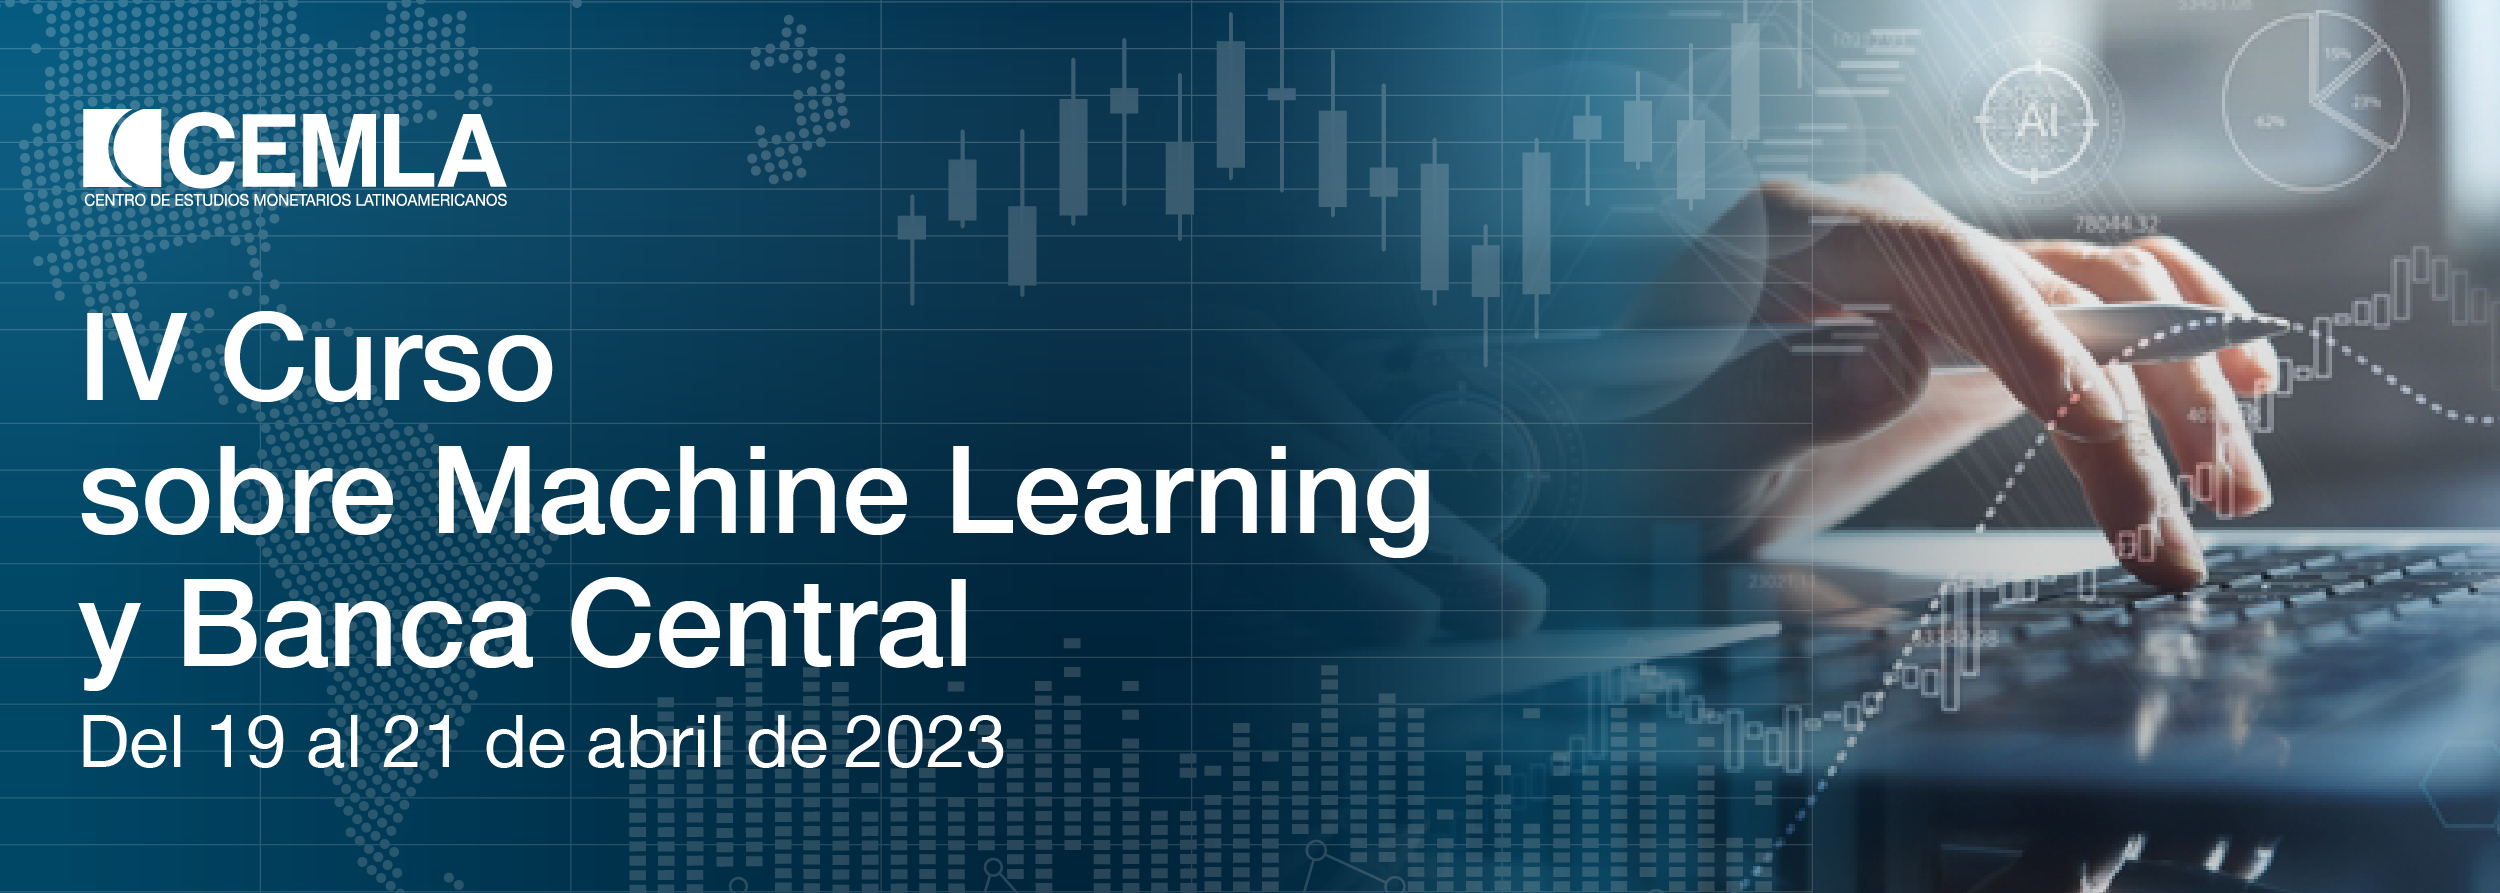 IV Curso sobre Machine Learning y Banca Central 